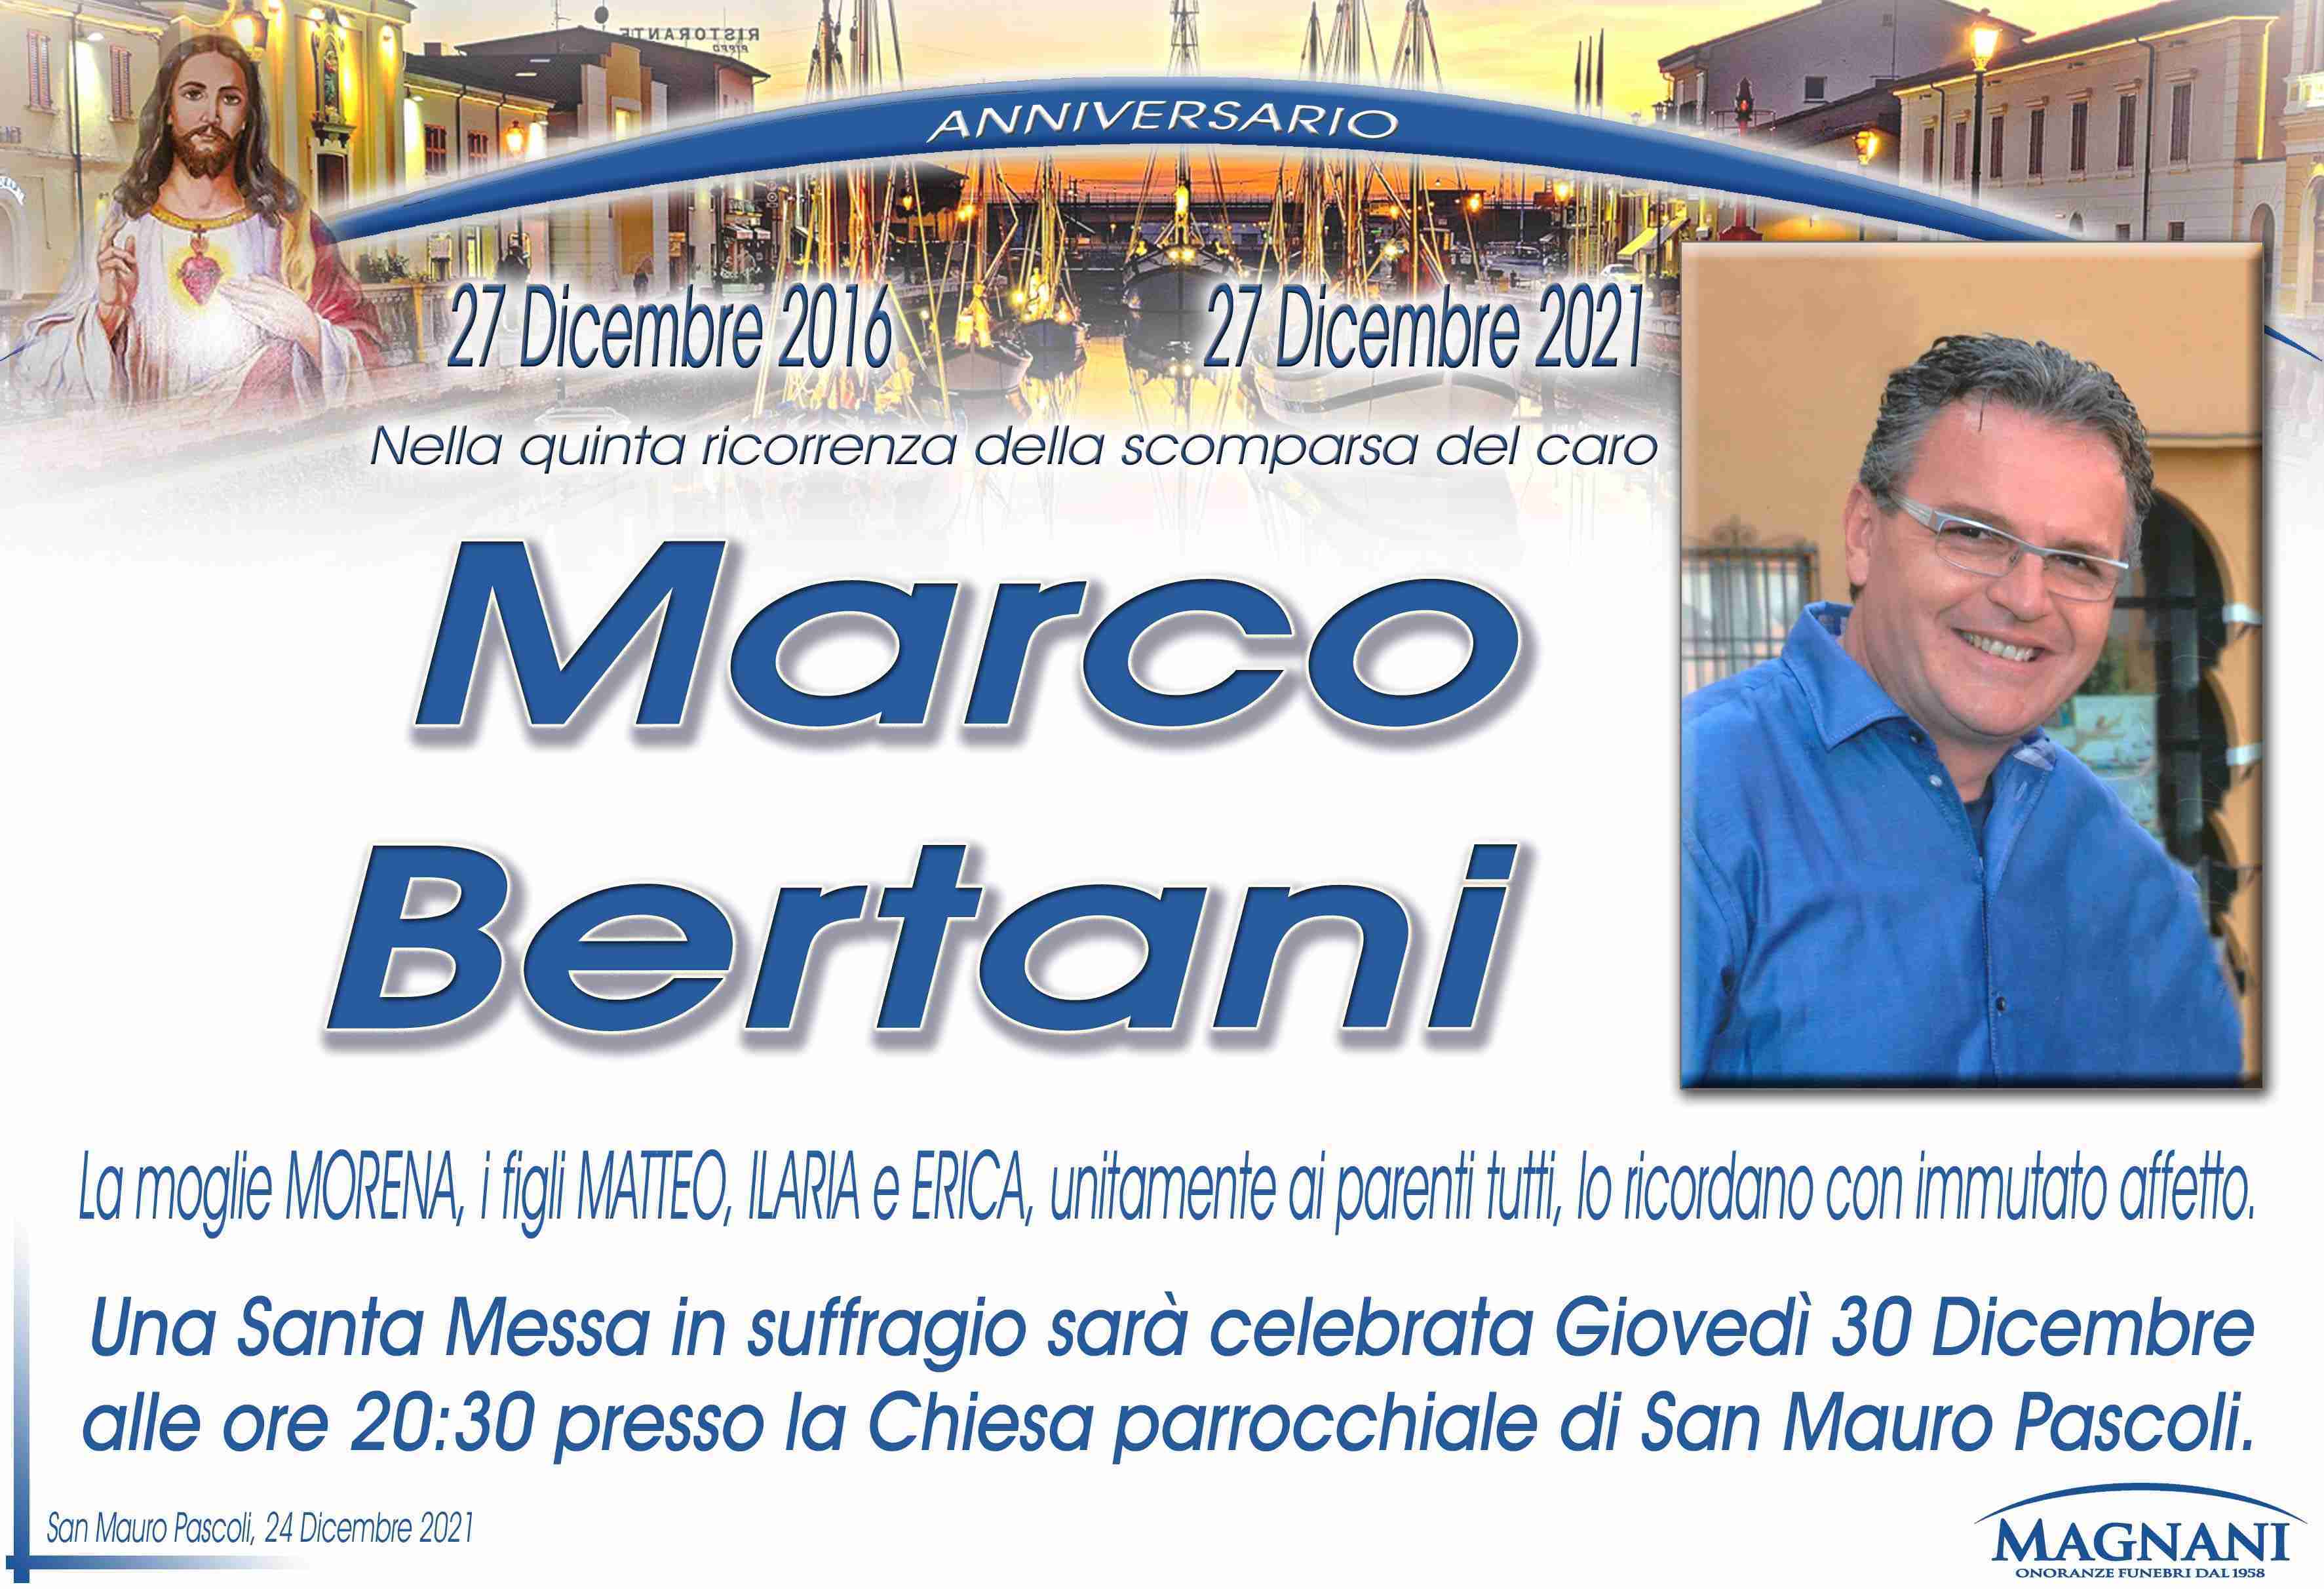 Marco Bertani